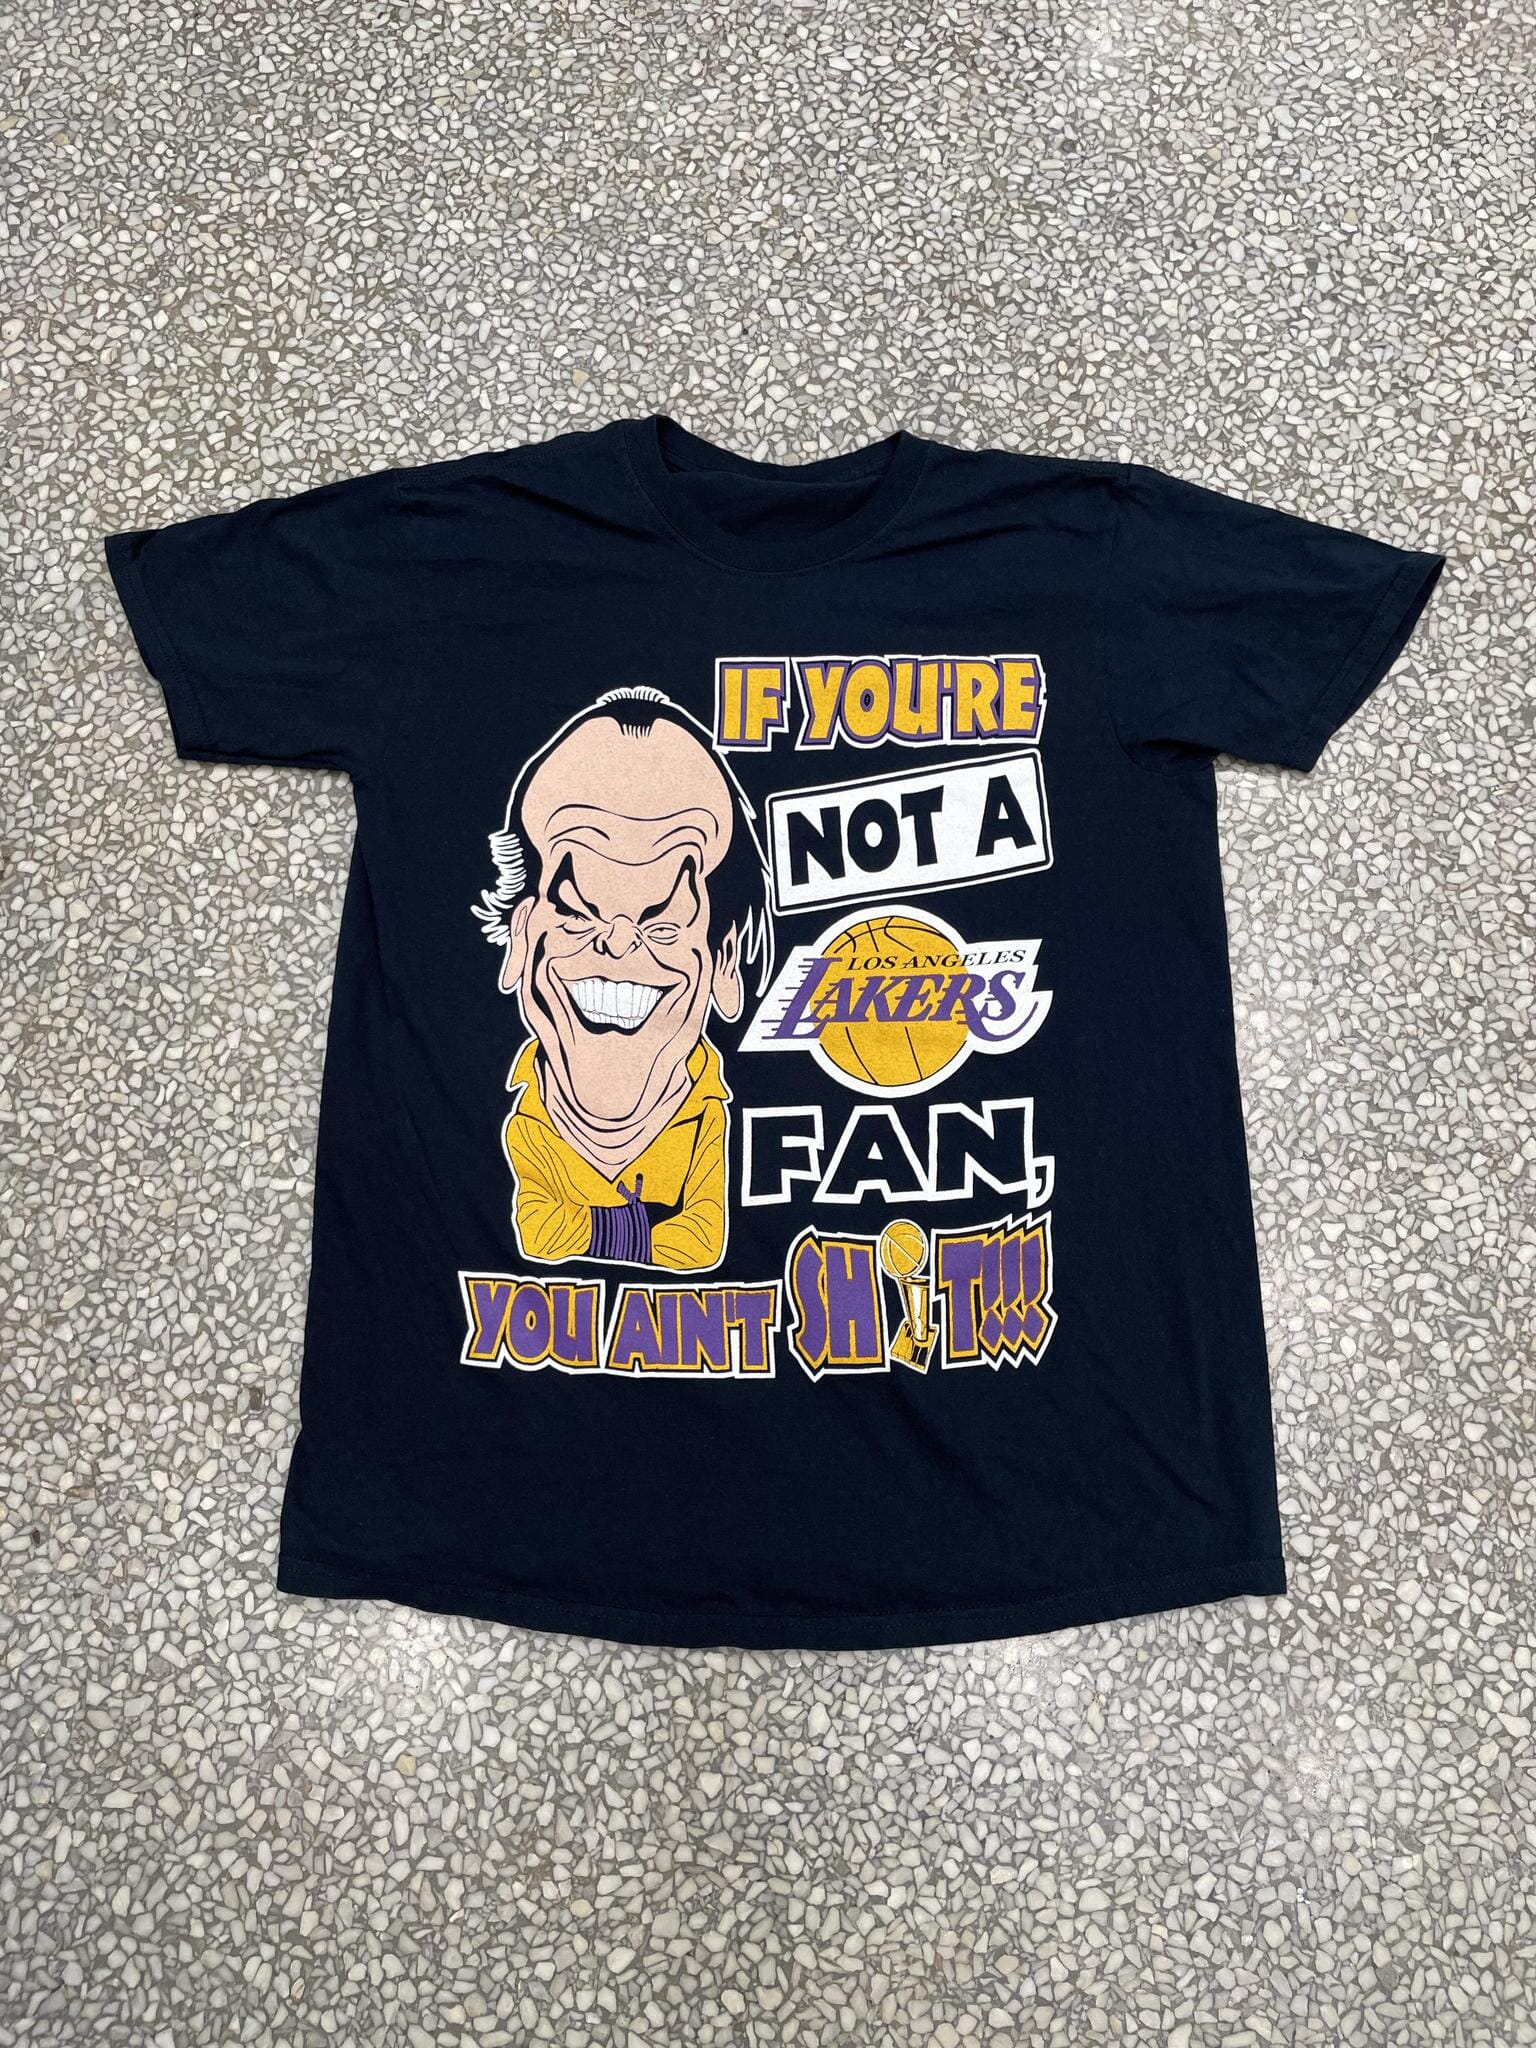 Lakers 3 Peat Shirt, Lakers Champions T-Shirt